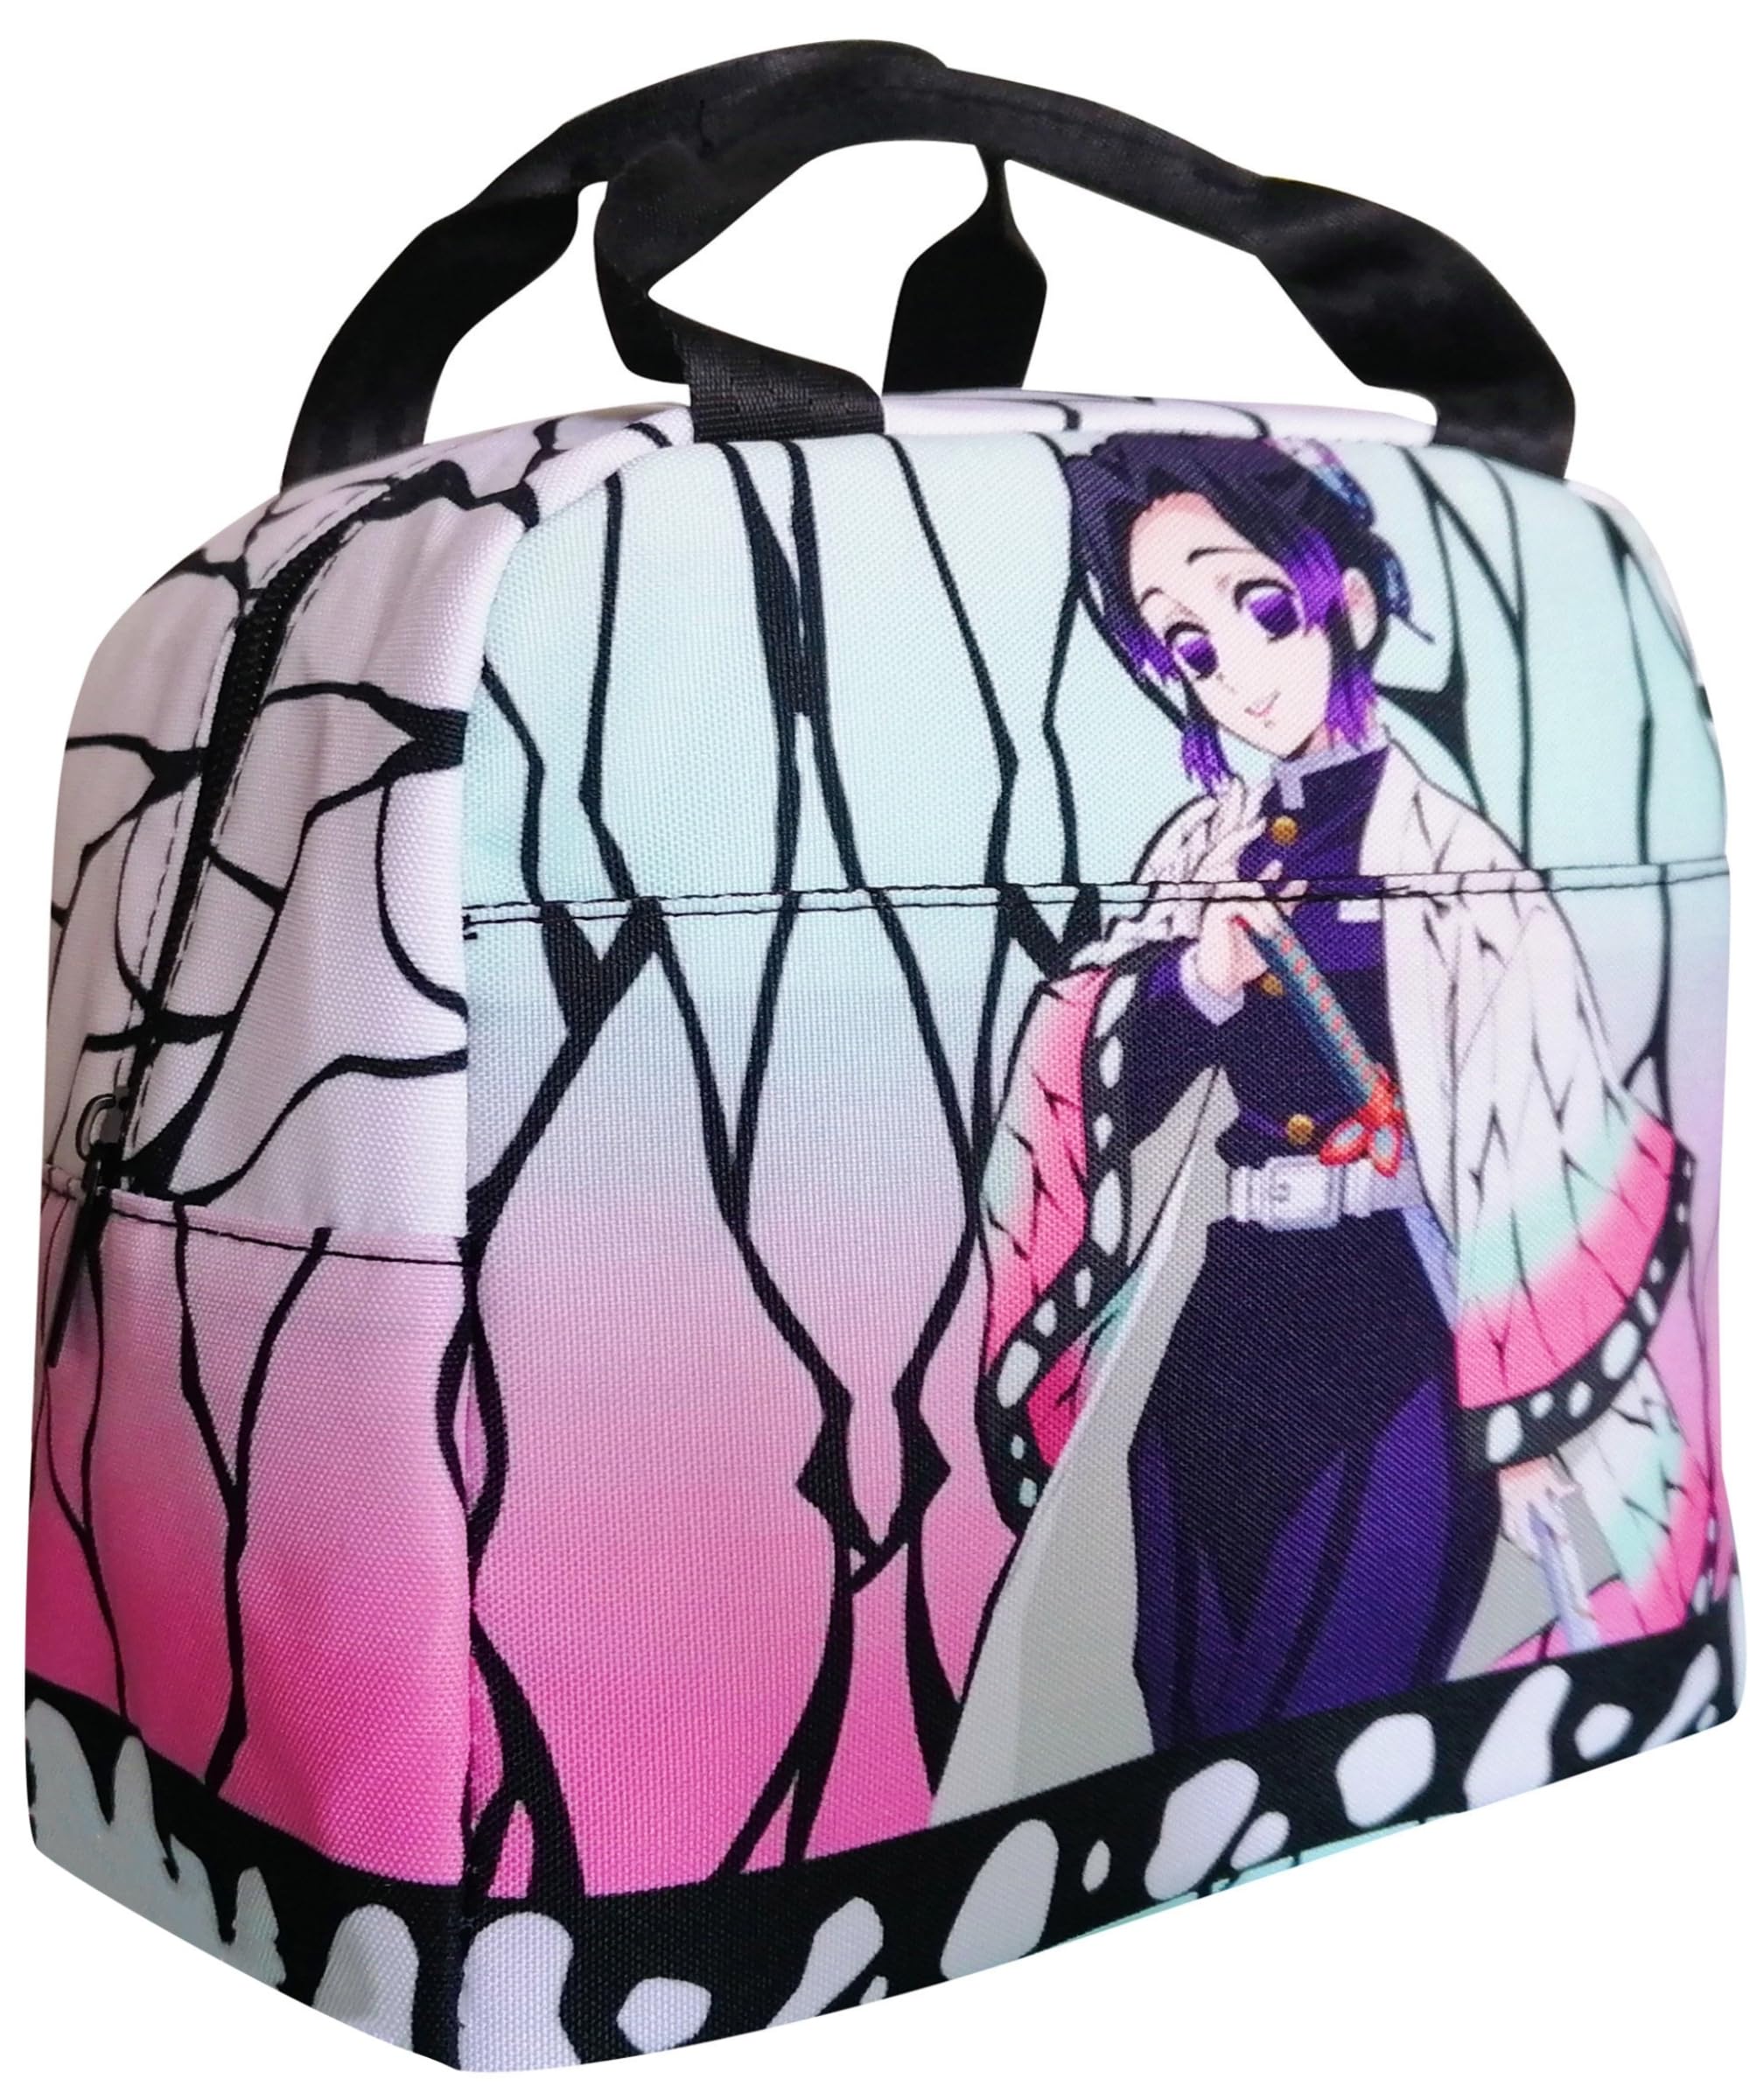 XIXISA Anime Demon Slayer Kochou Shinobu Lunch Box Holder Insulated Lunch Cooler Bag for Men and Women Travel Portable Storage Bag (Kochou Shinobu)